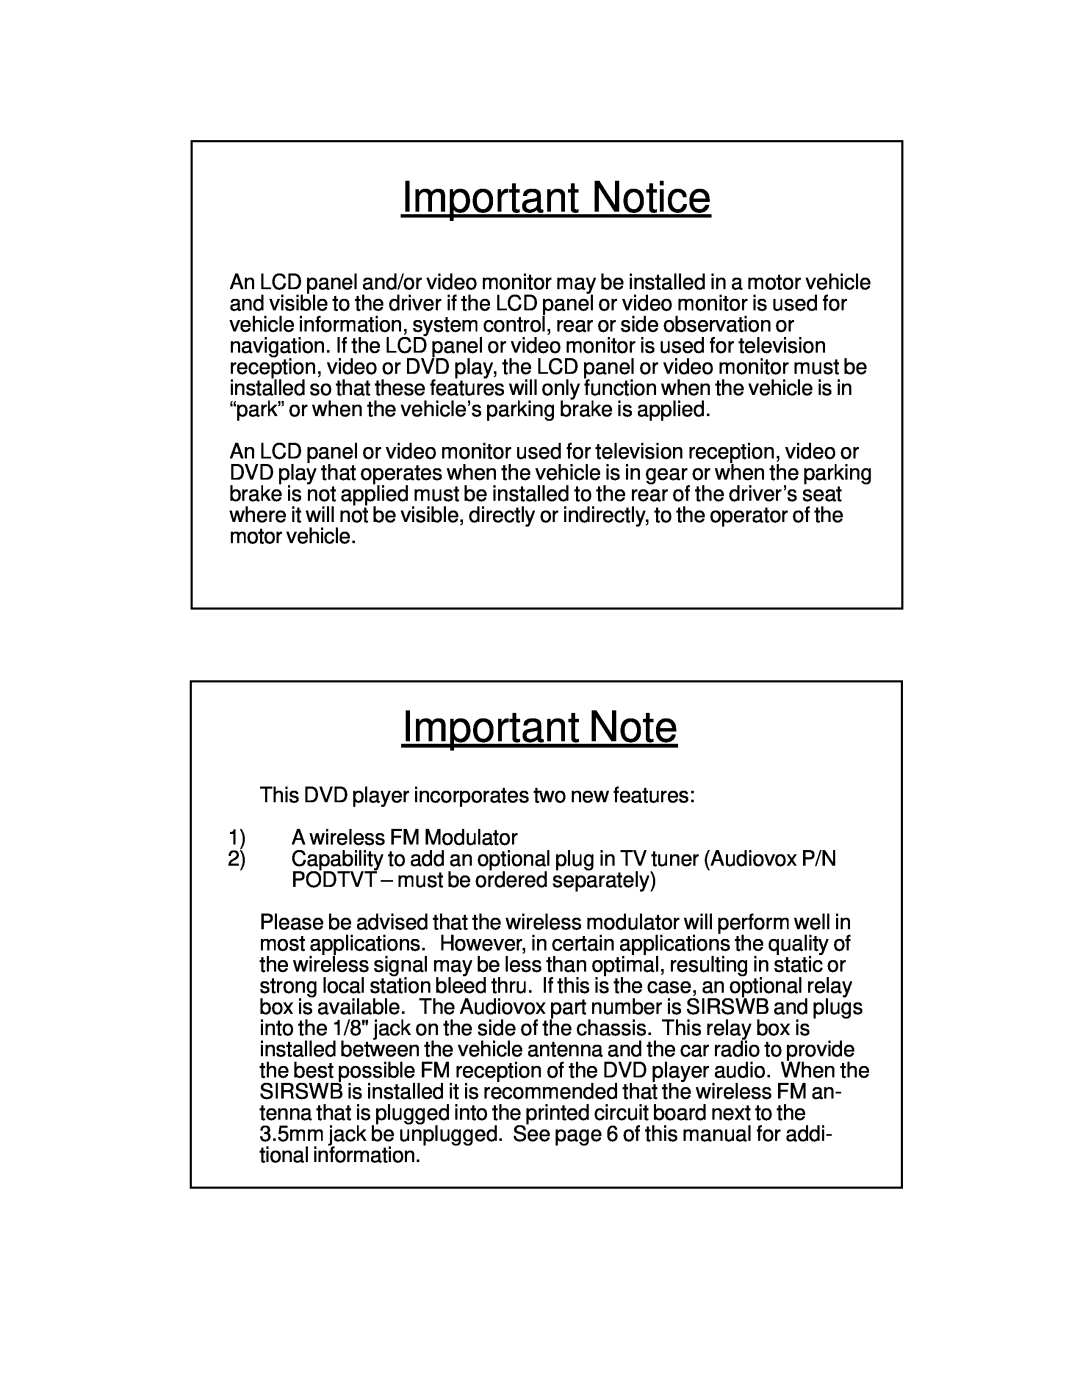 Audiovox VOH1012P, VOH1012 S manual Important Notice, Important Note 